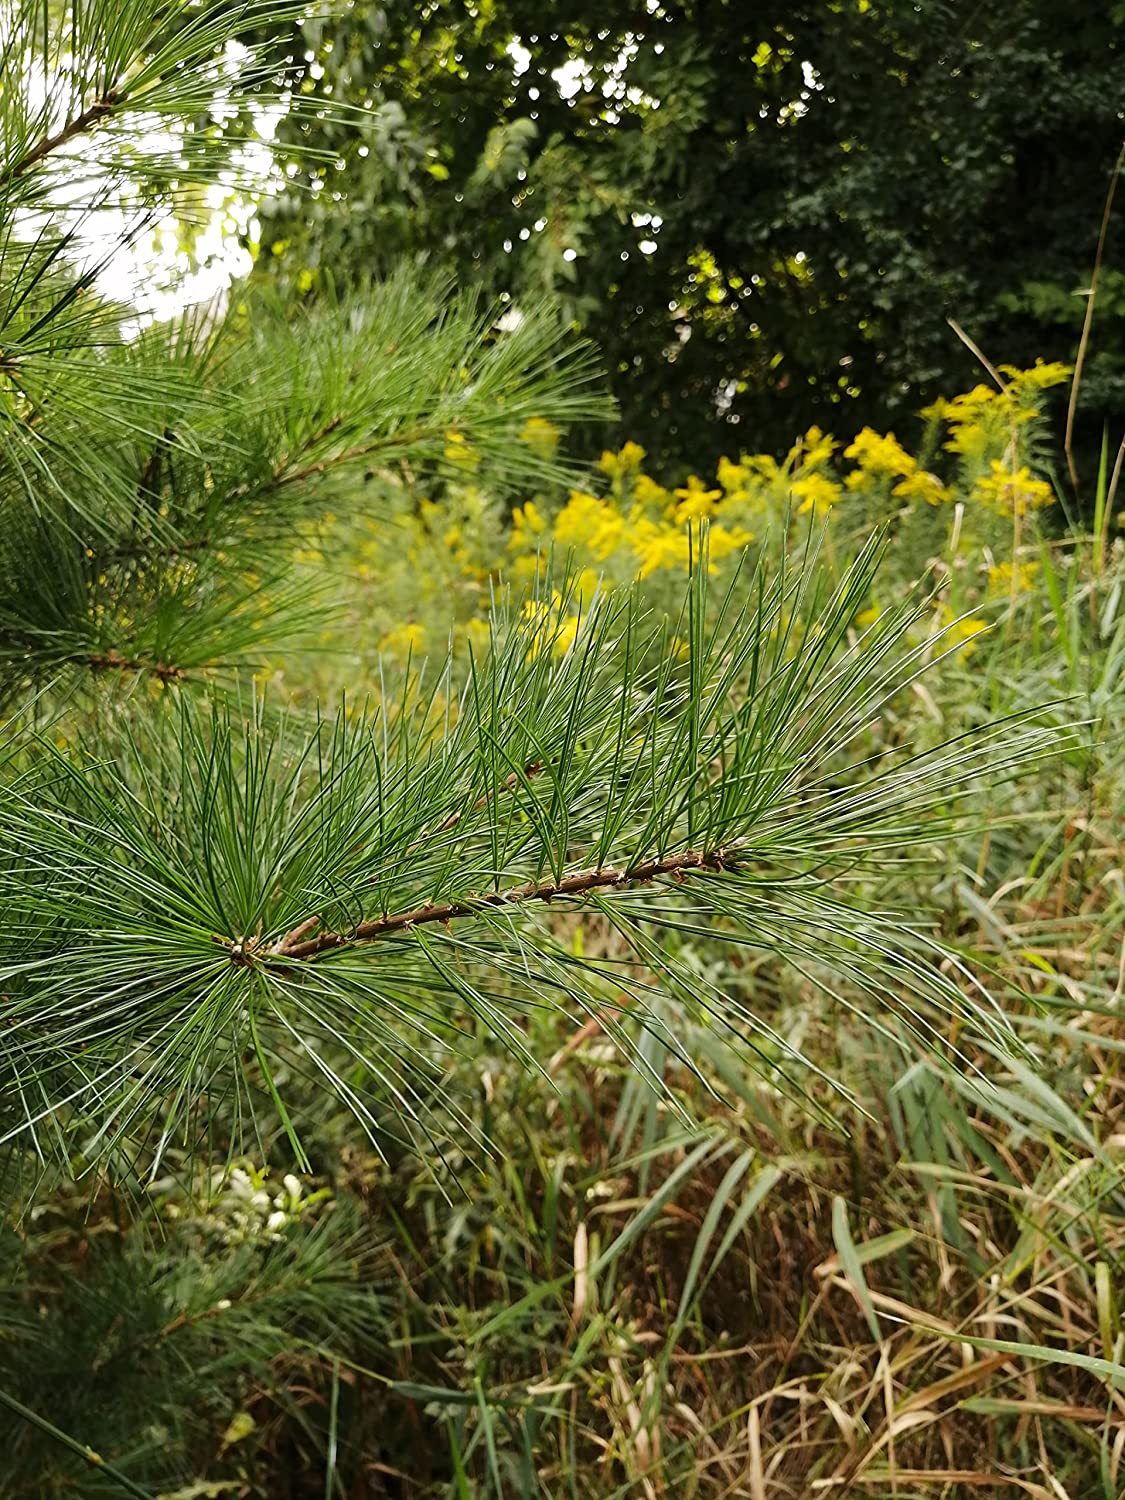 Eastern White Pine 10 Tree Seeds - Pinus strobus Canada & USA Native Tree, Weymouth Pine, for Windbreak, Firewood or Bonsai Houseplant